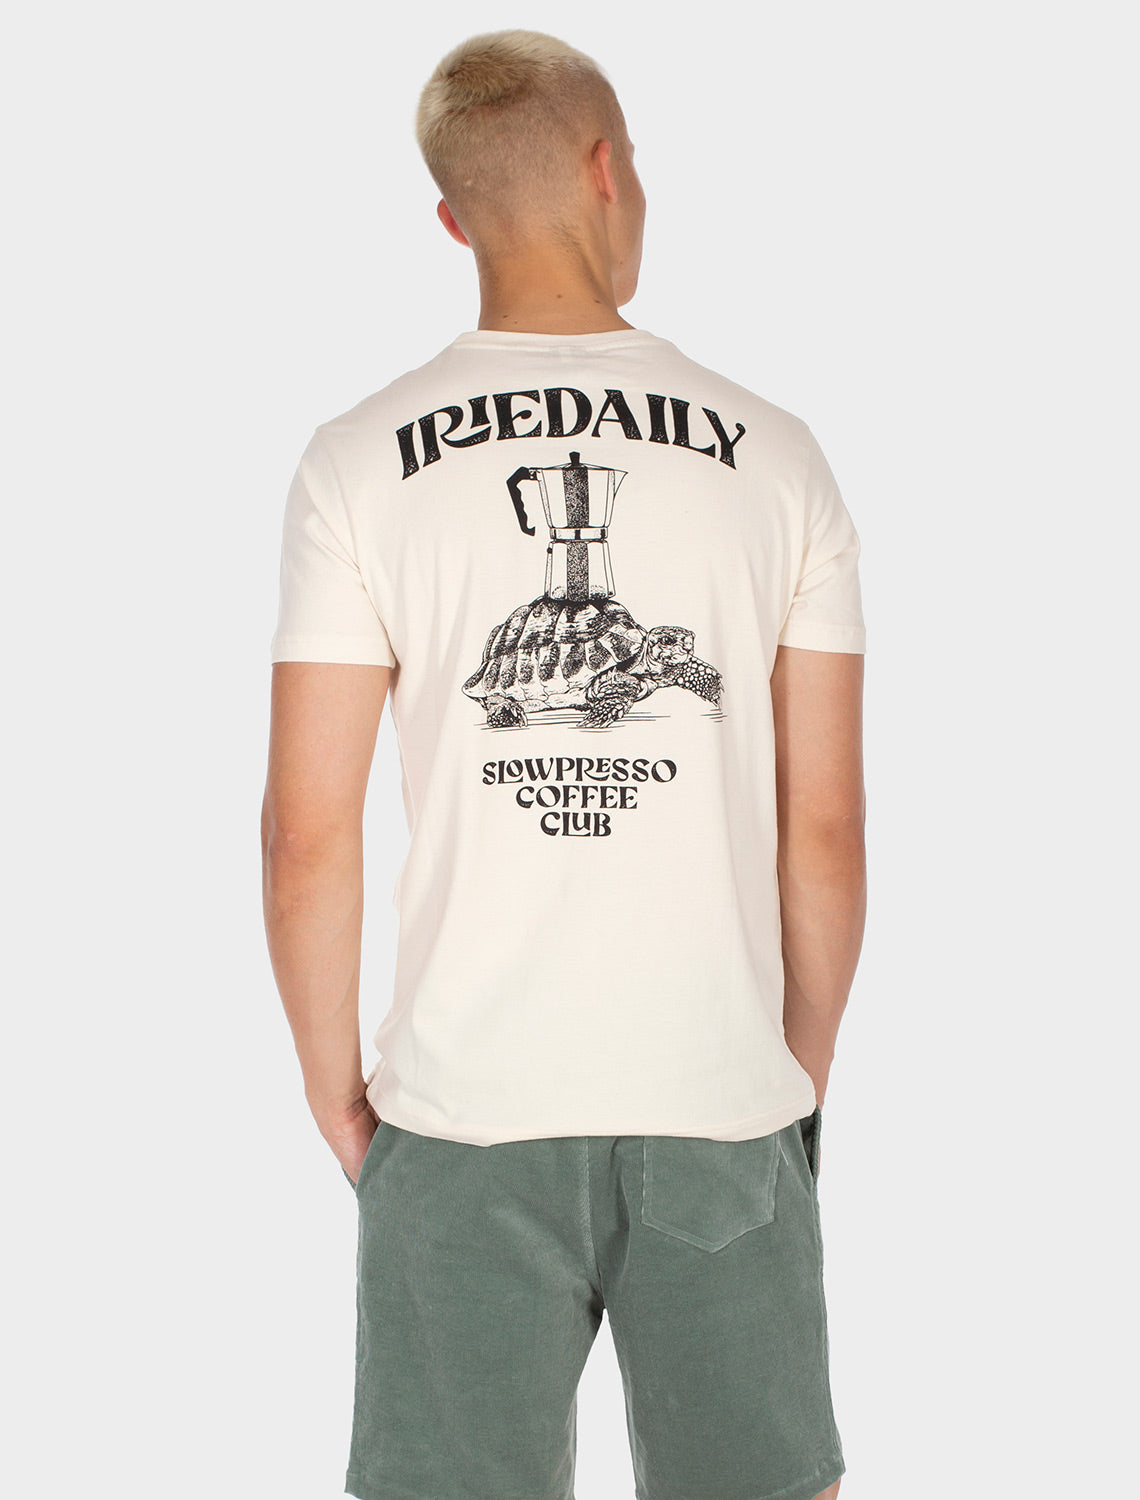 Iriedaily Slowpresso T-Shirt - Undyed